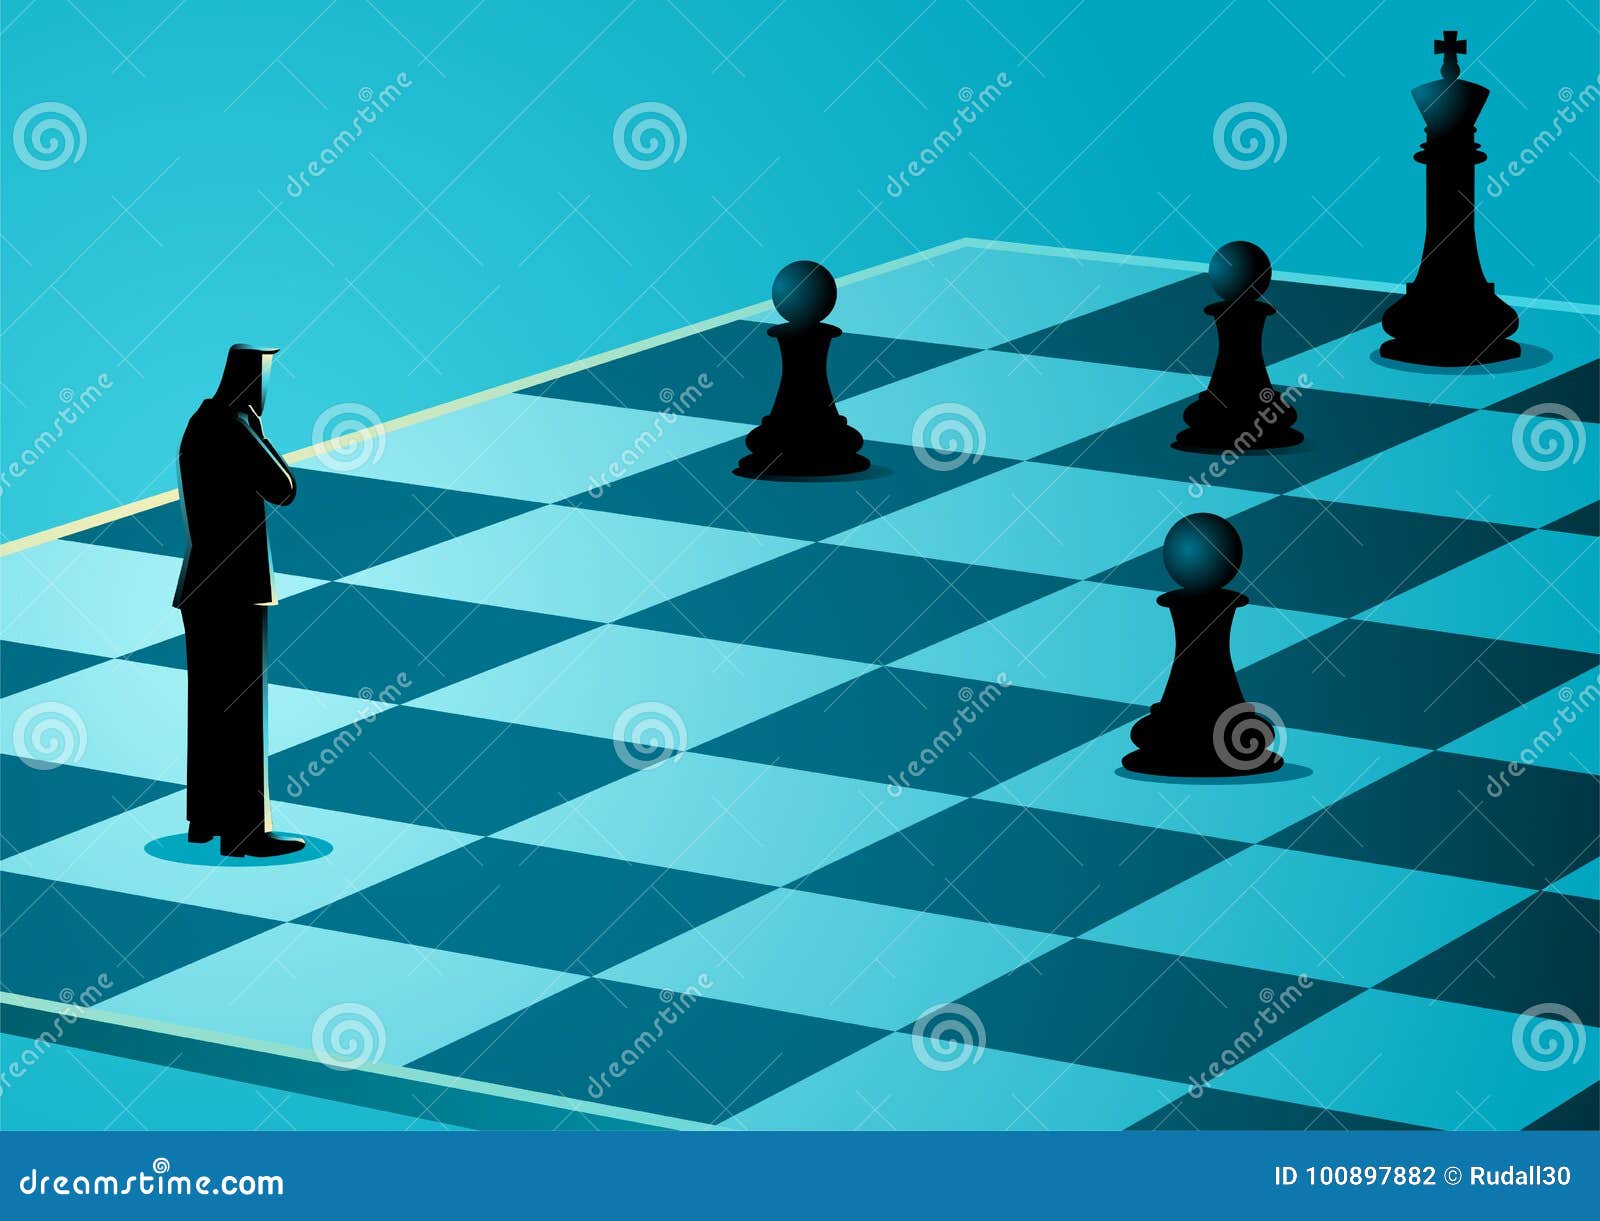 Chessboard Thinking Stock Illustrations – 3,453 Chessboard Thinking ...